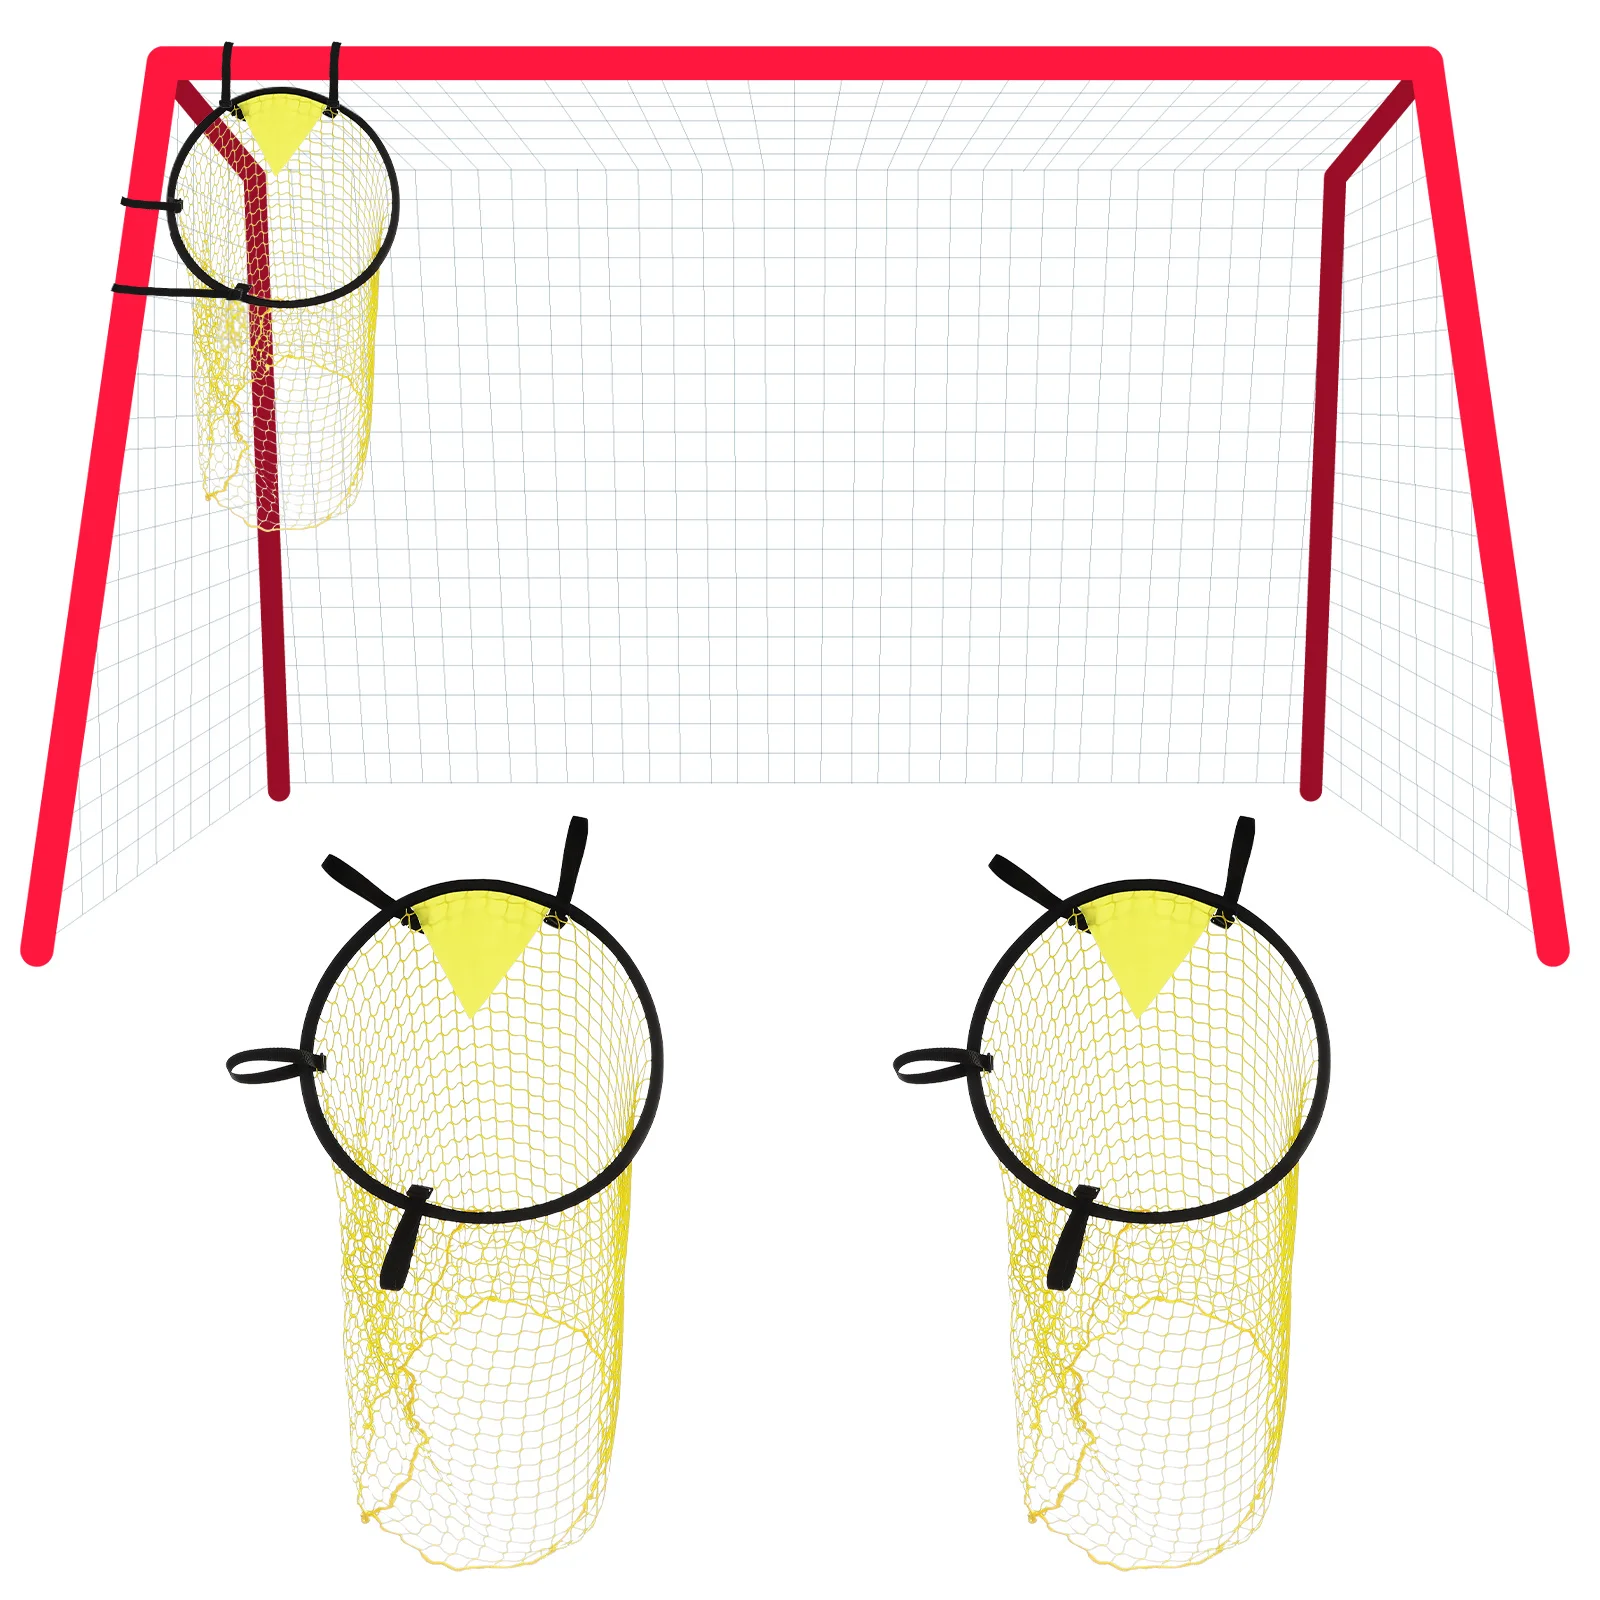 

2 Pcs Top Bins Football Targets Soccer Goal Soccer Football Goal Net Soccer Training Practice